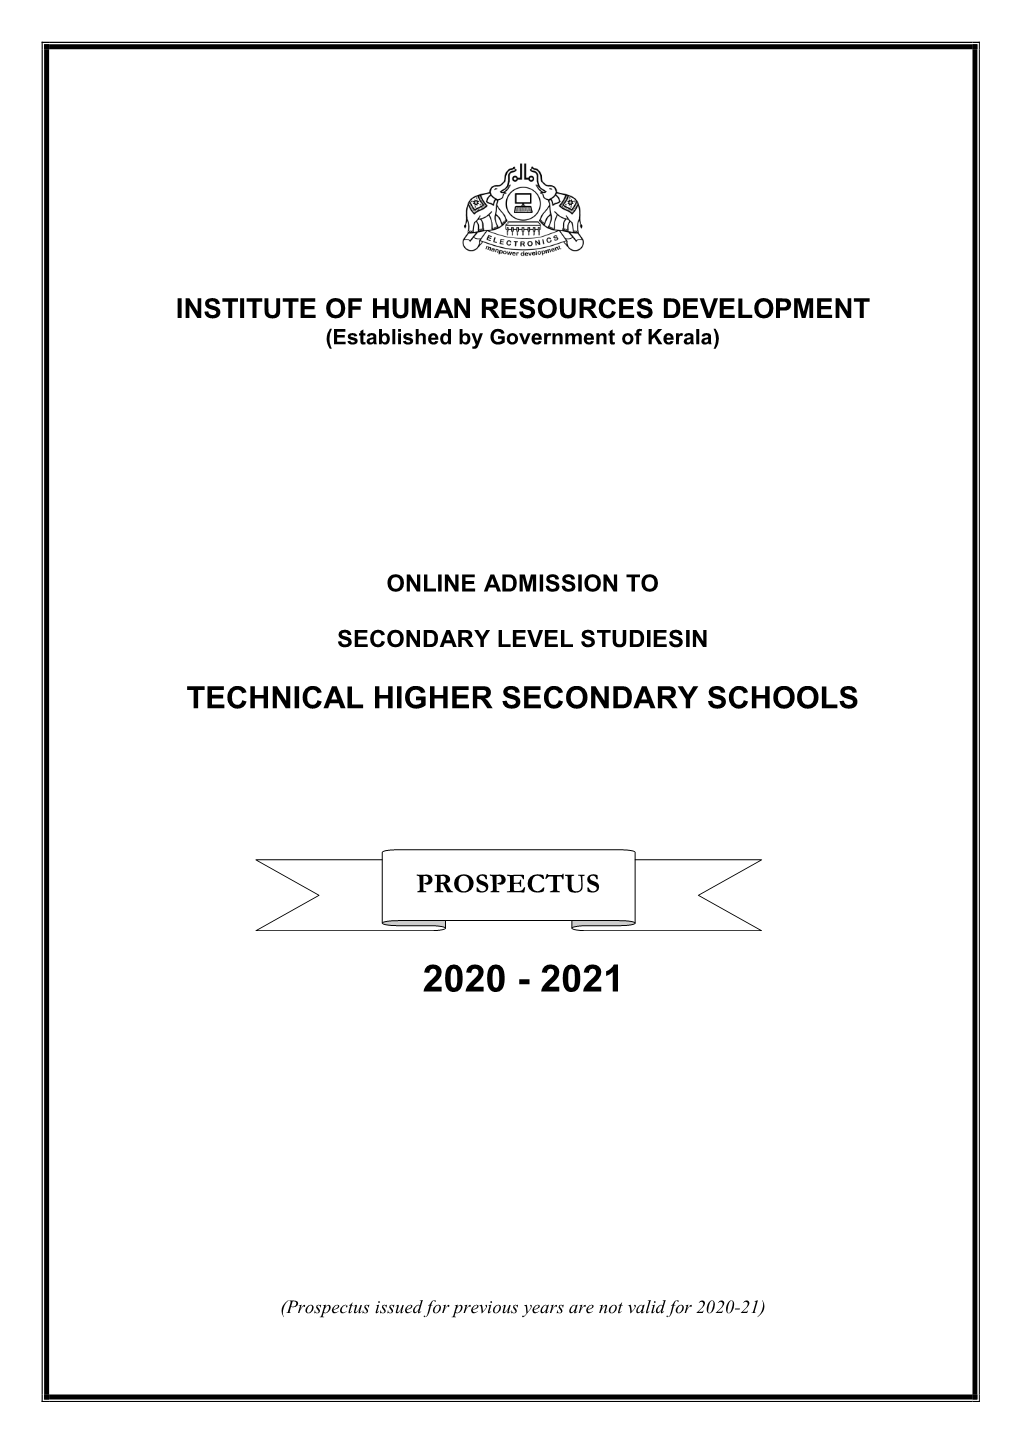 Technical Higher Secondary Schools